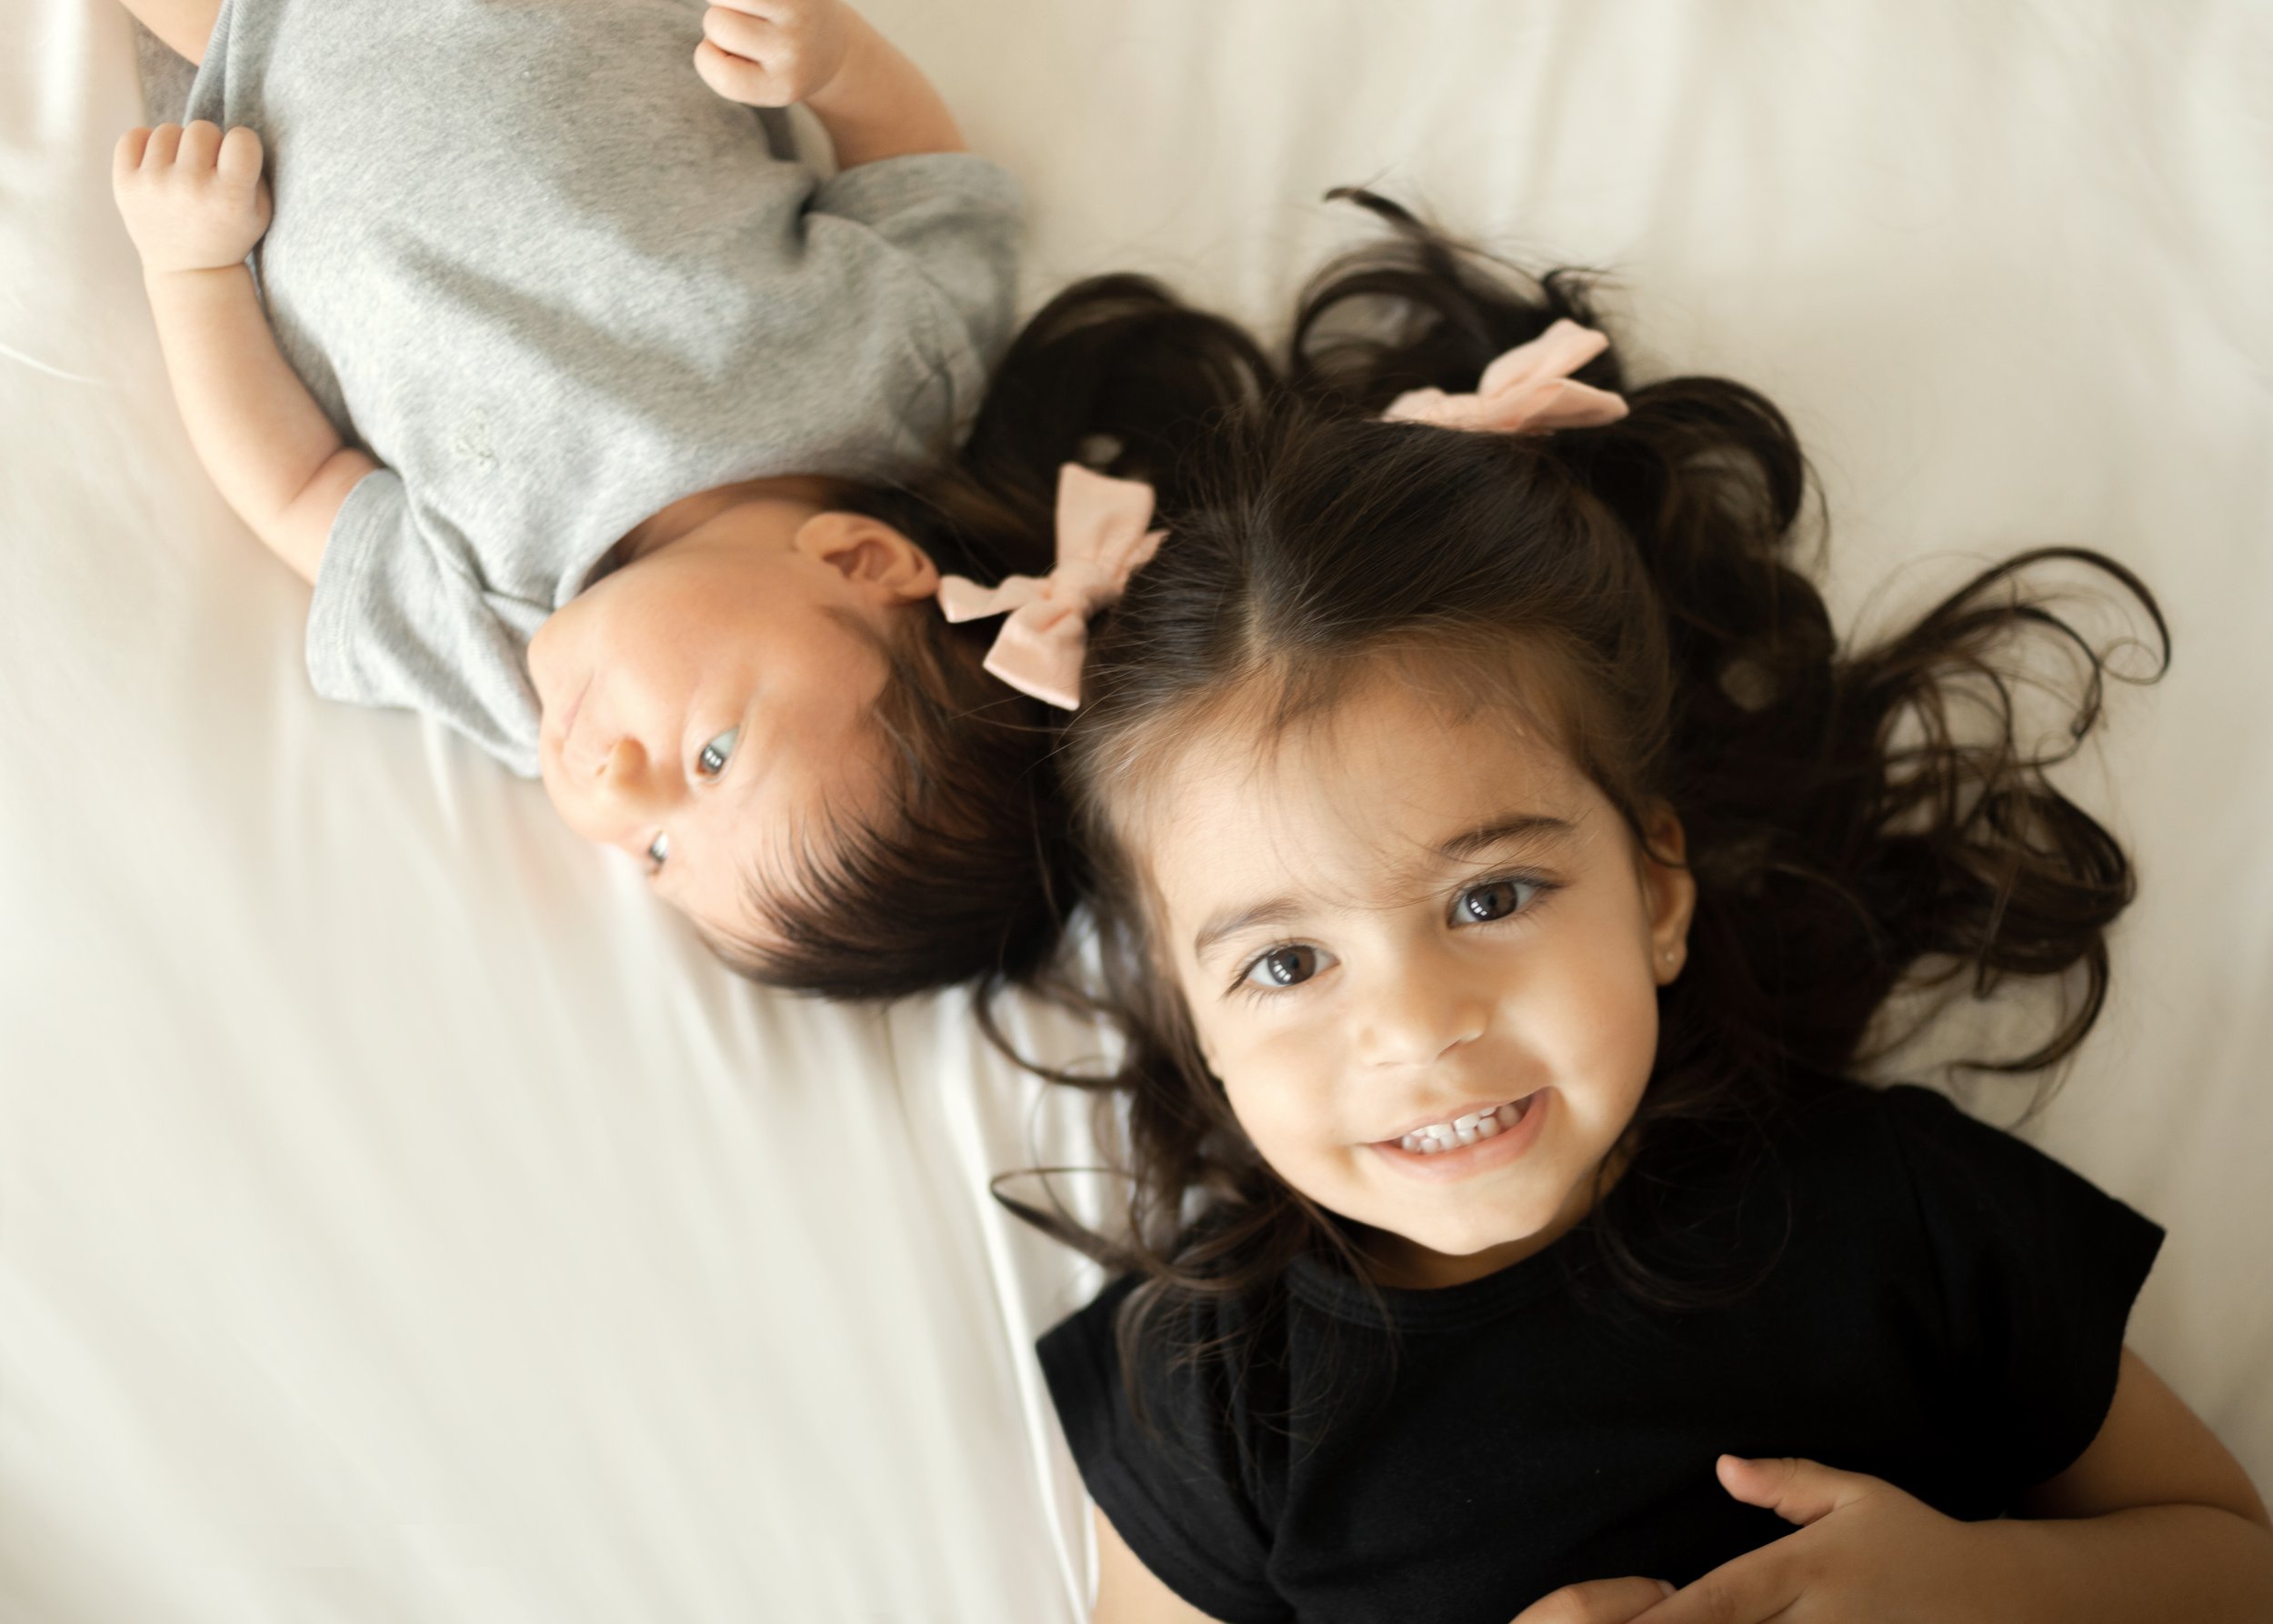 Sibling and Baby Photos